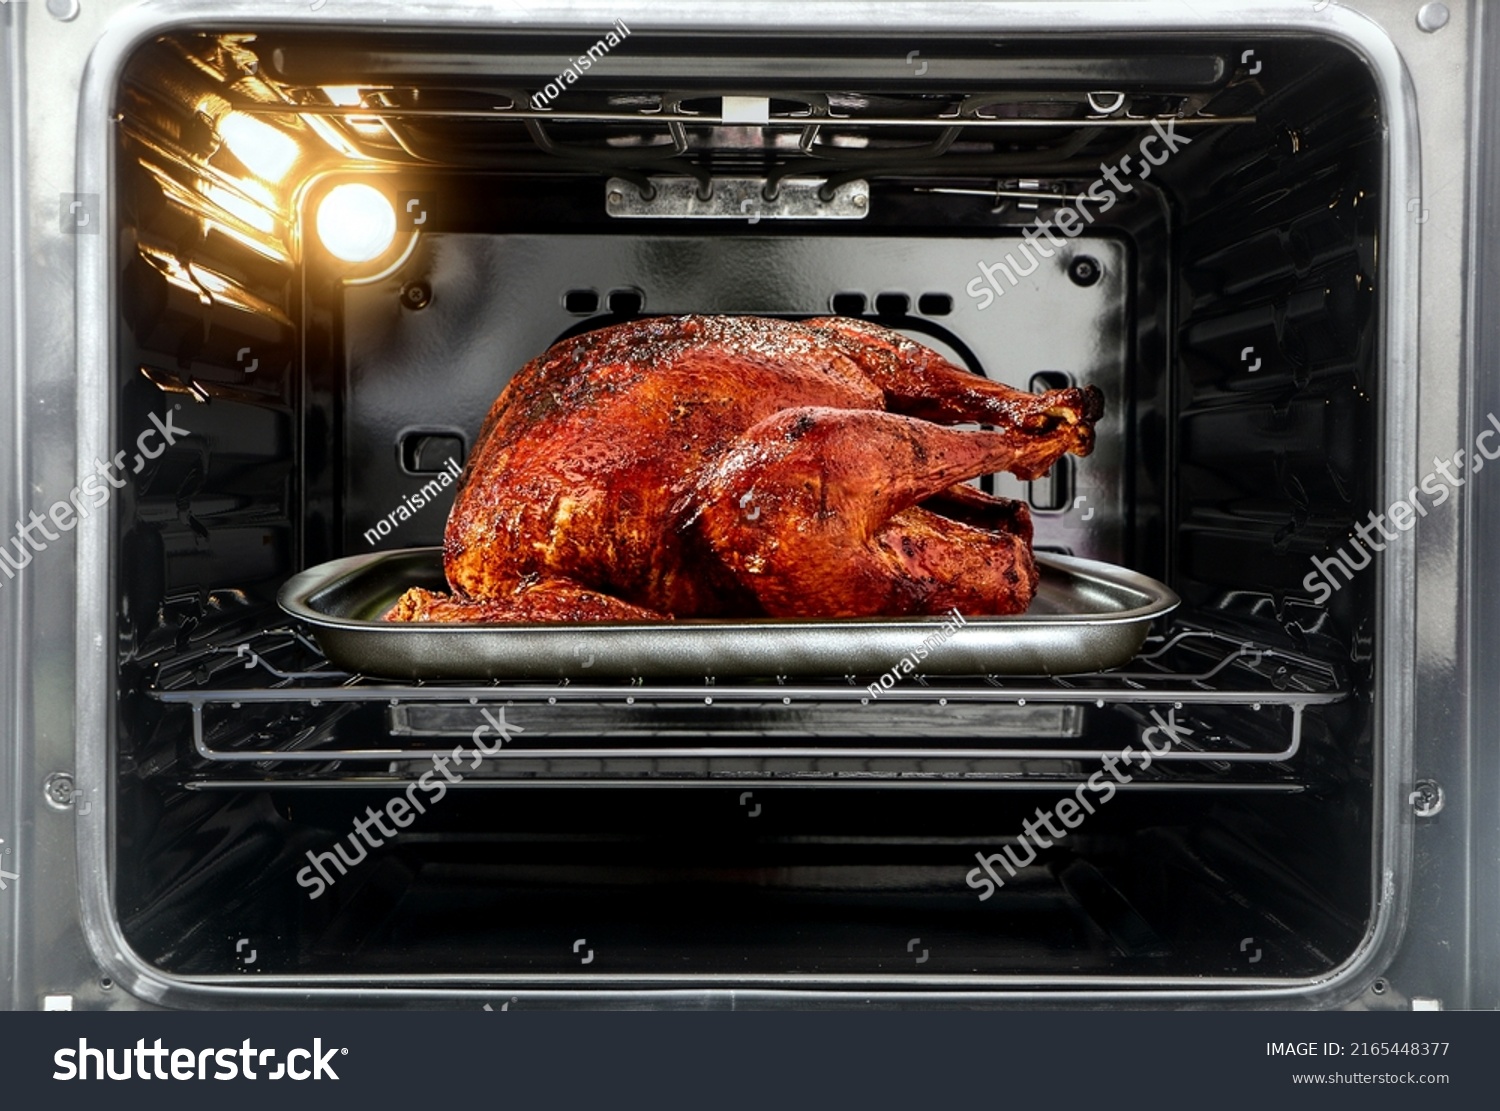 Whole roast turkey in the oven #2165448377